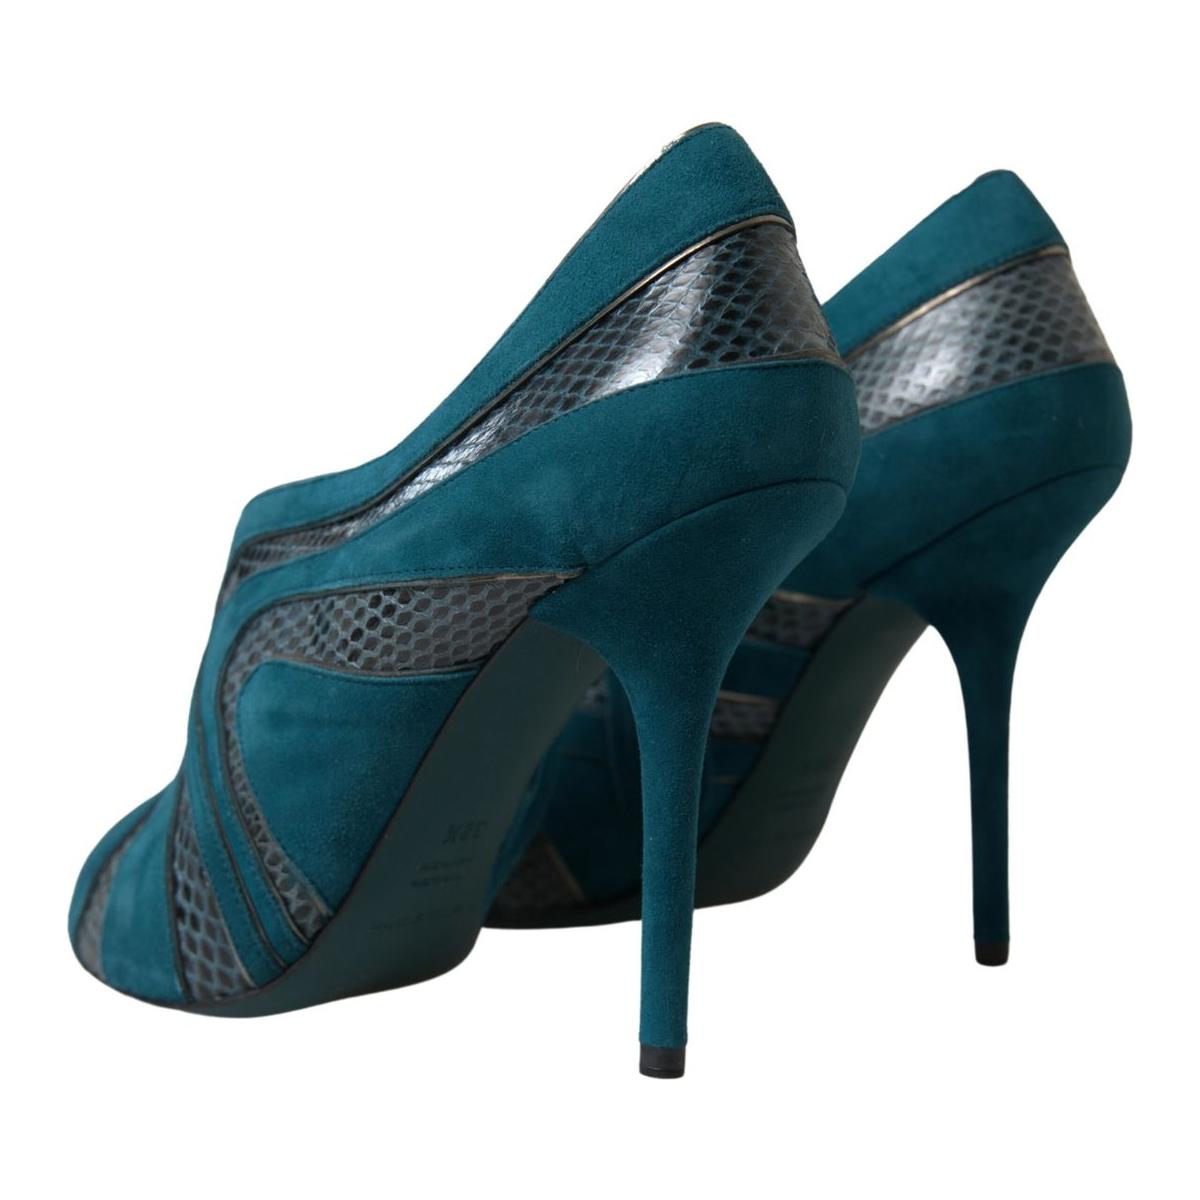 Dolce & Gabbana Chic Blue Peep Toe Stiletto Ankle Booties blue-teal-snakeskin-peep-toe-ankle-booties-shoes 465A8808-scaled-62e27f3b-b0c_b439af88-1fda-4b1a-a8e1-eef99f92e9e7.jpg